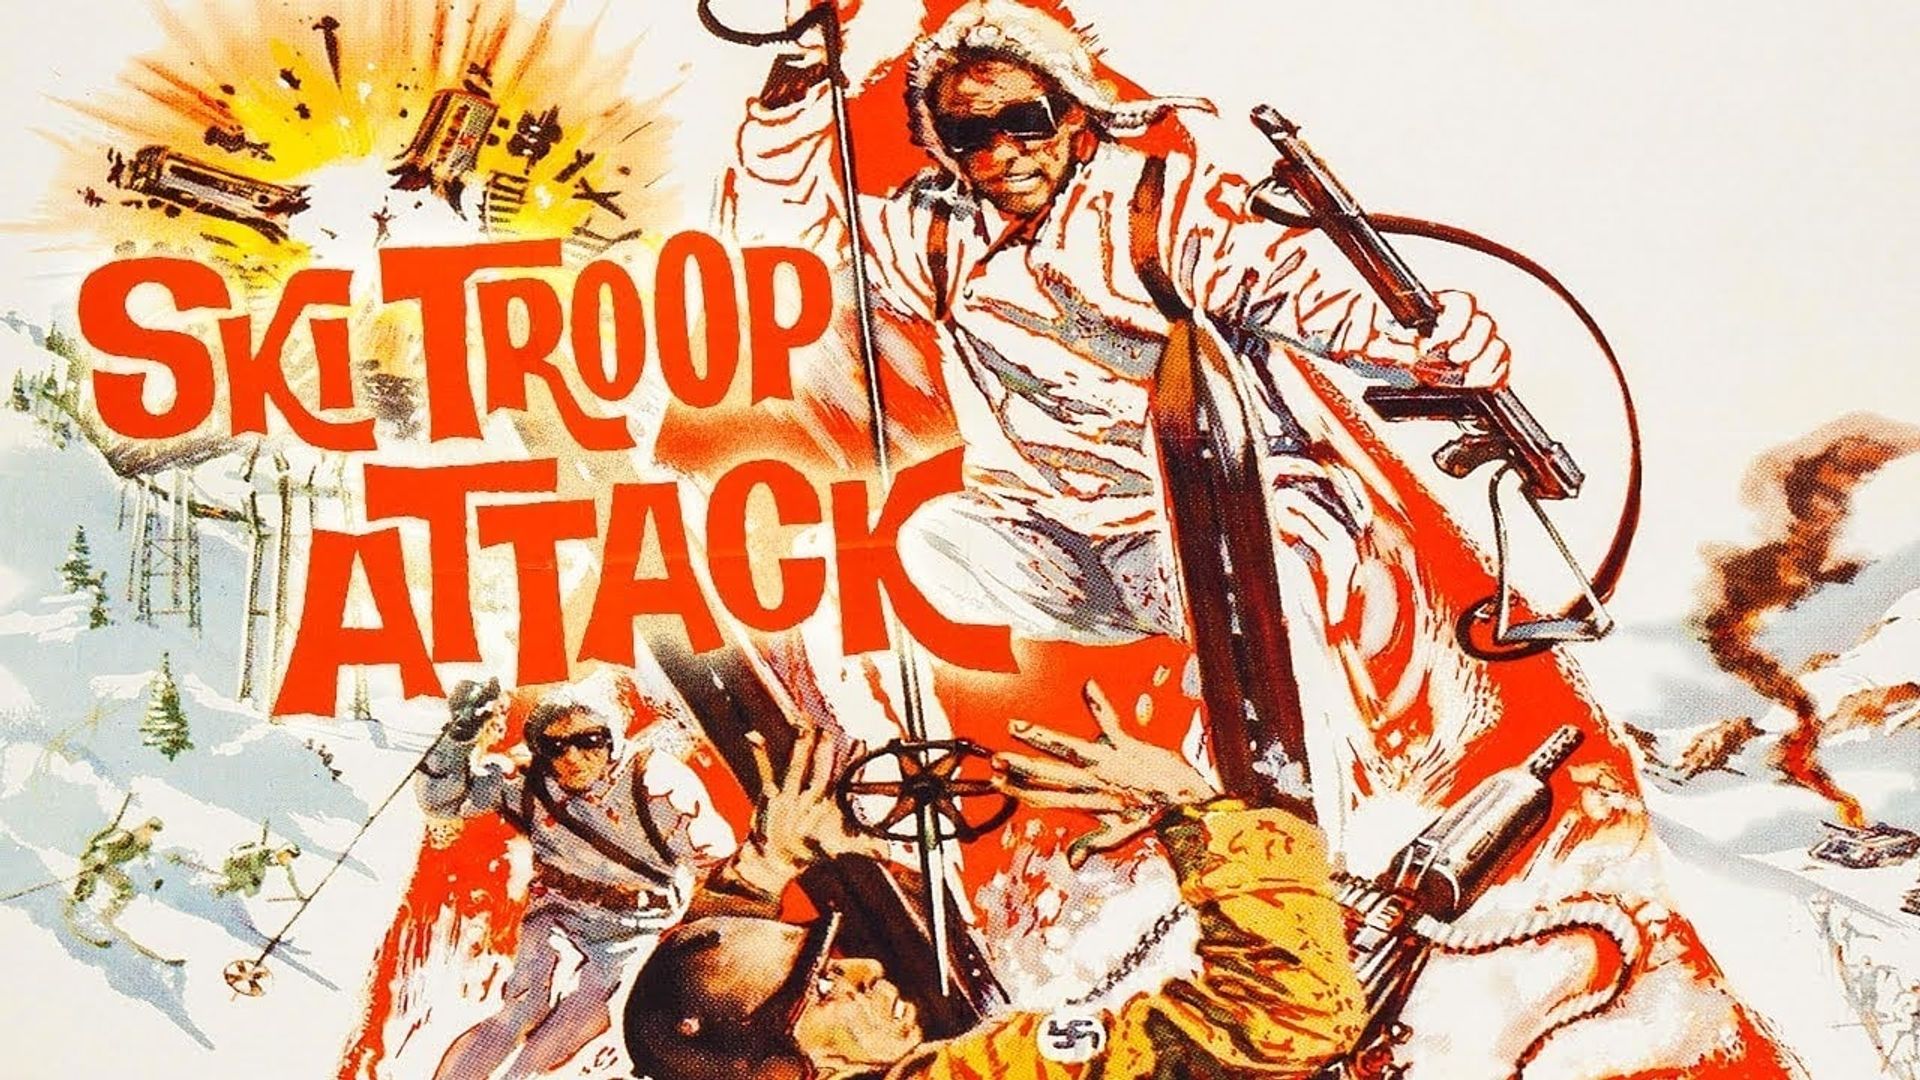 Ski Troop Attack Backdrop